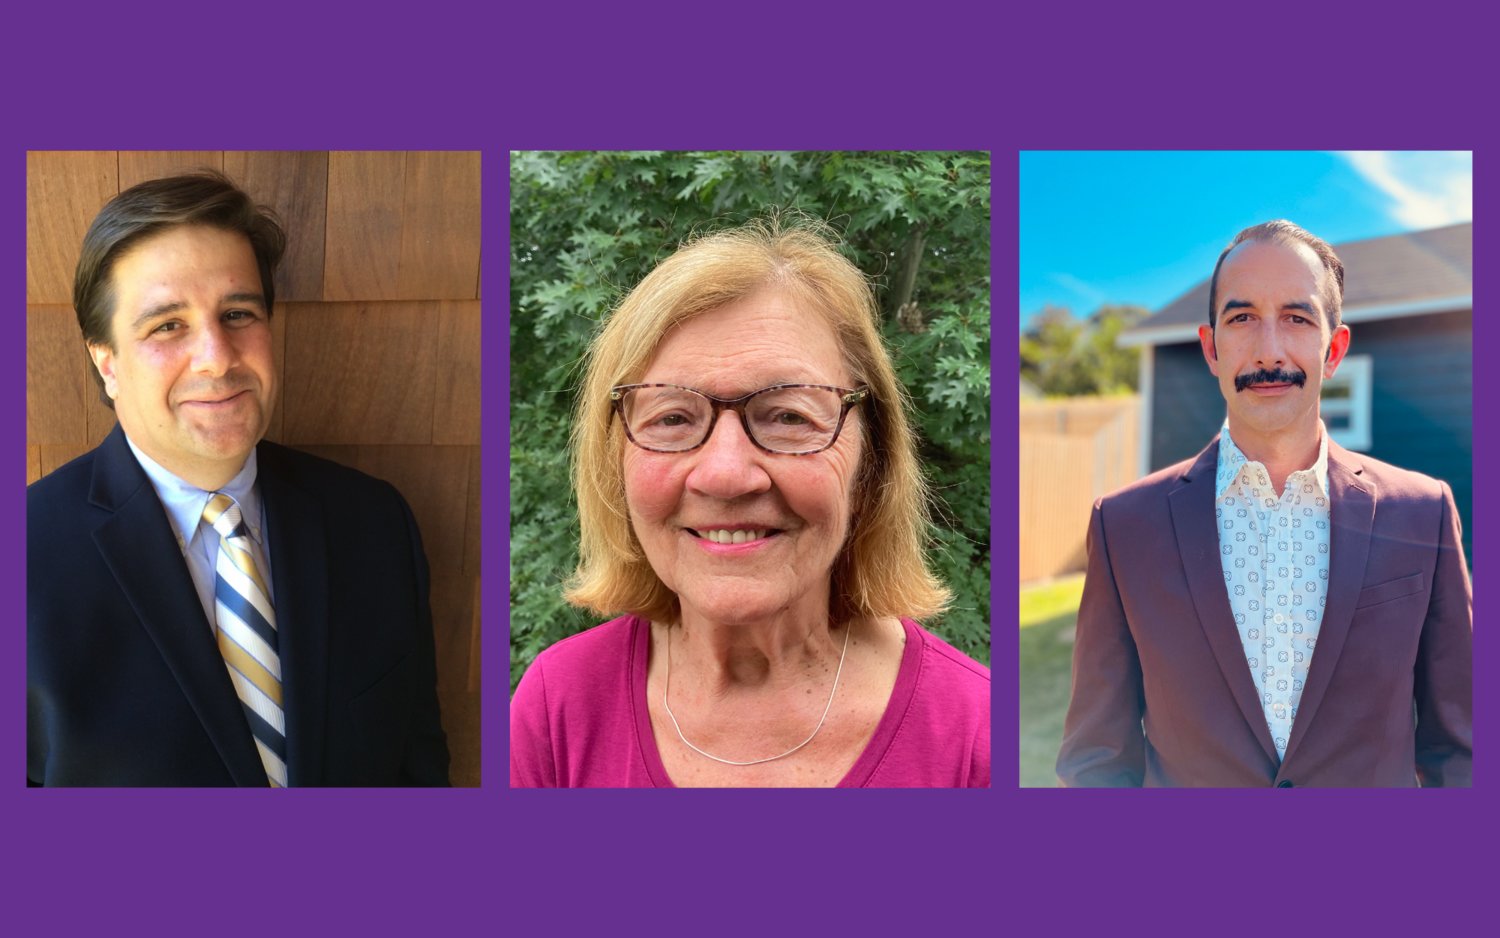 Jarrod Hazard, Nancy Fritz, and Kyle Jackson are competing for one seat on the Bristol Warren Regional School Committee.